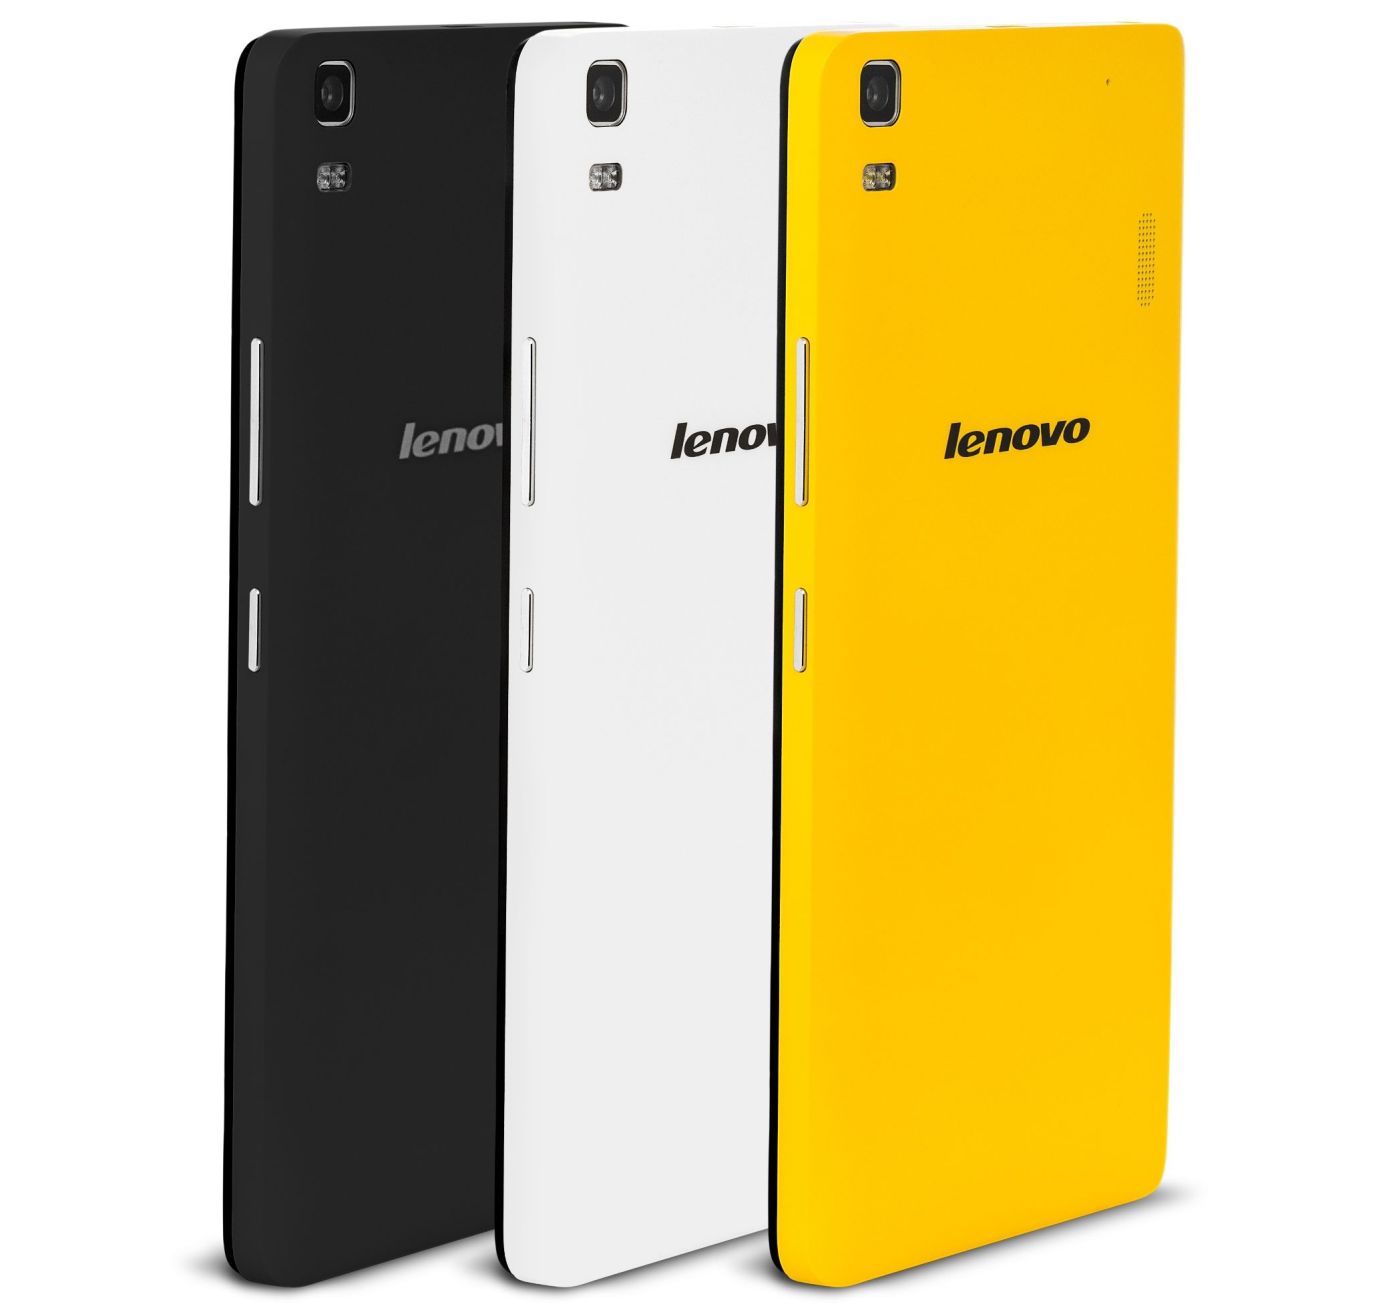 Lenovo K3 Note - Full HD Display, 13MP Camera, 4G for ₹ 9999